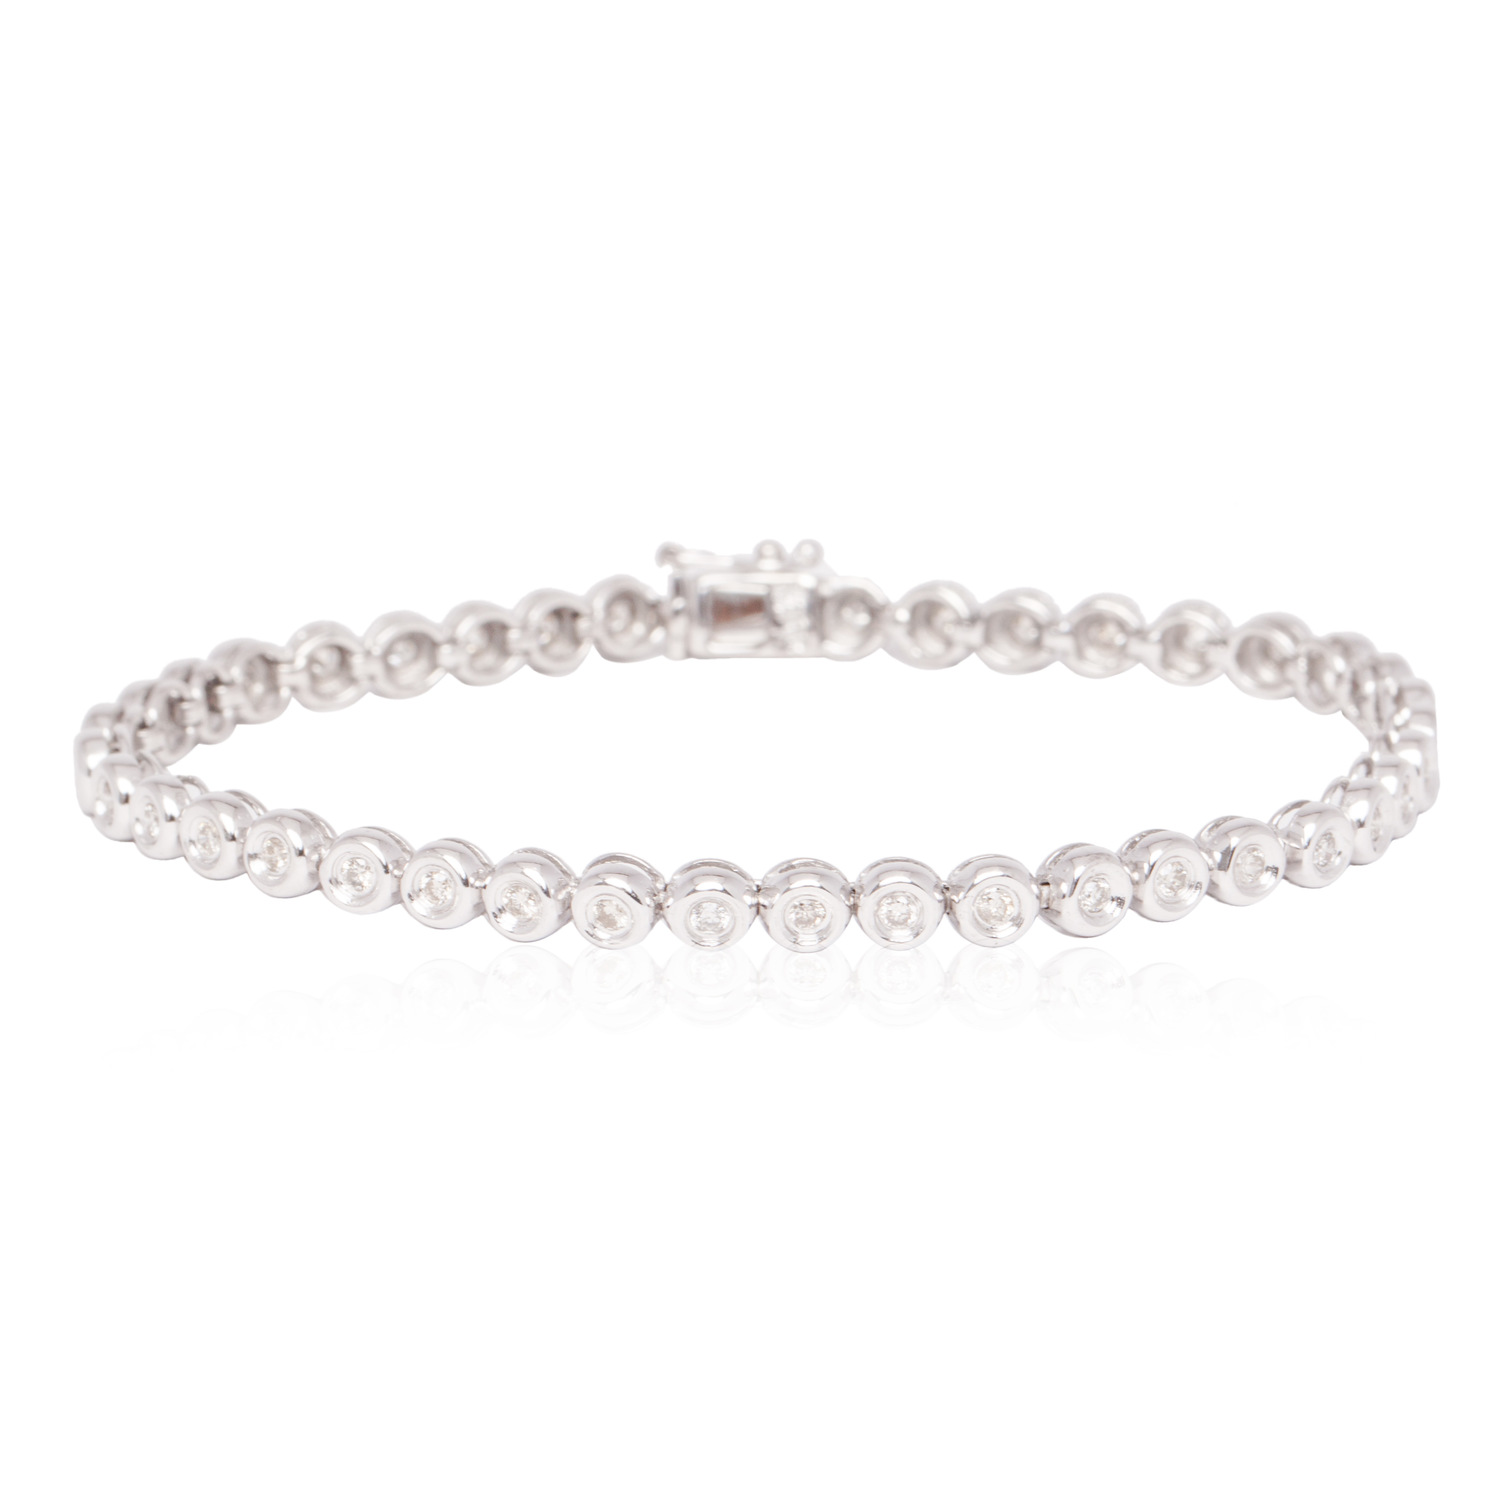 32-continental-jewels-manufacturers-bracelet-cjb000032-18k-white-gold-vvs1-diamonds-round-bracelet.jpg